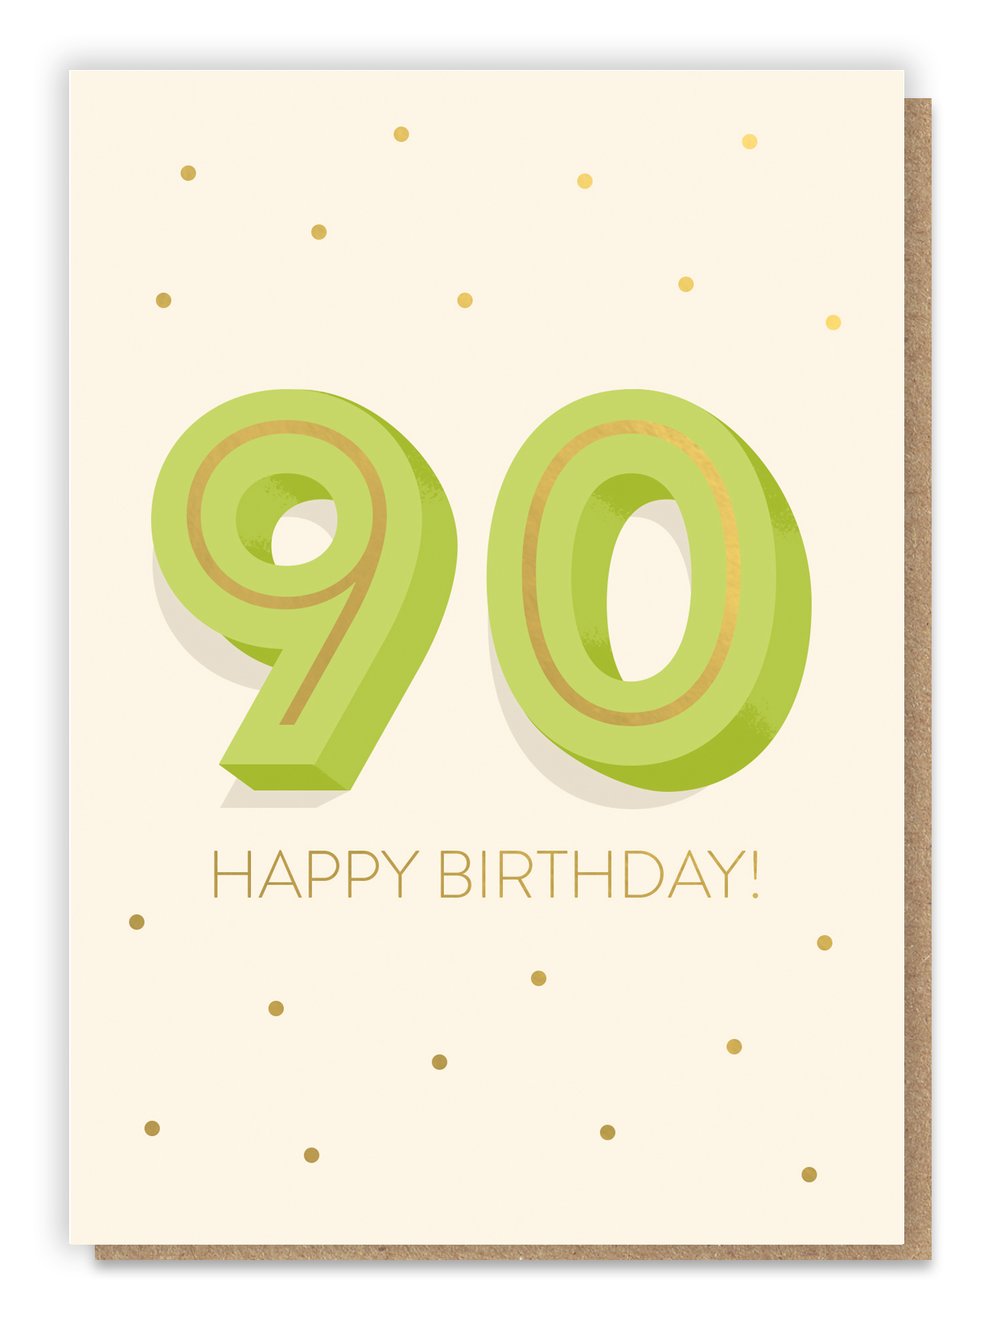 Big 9-0 Birthday Card - Age 90